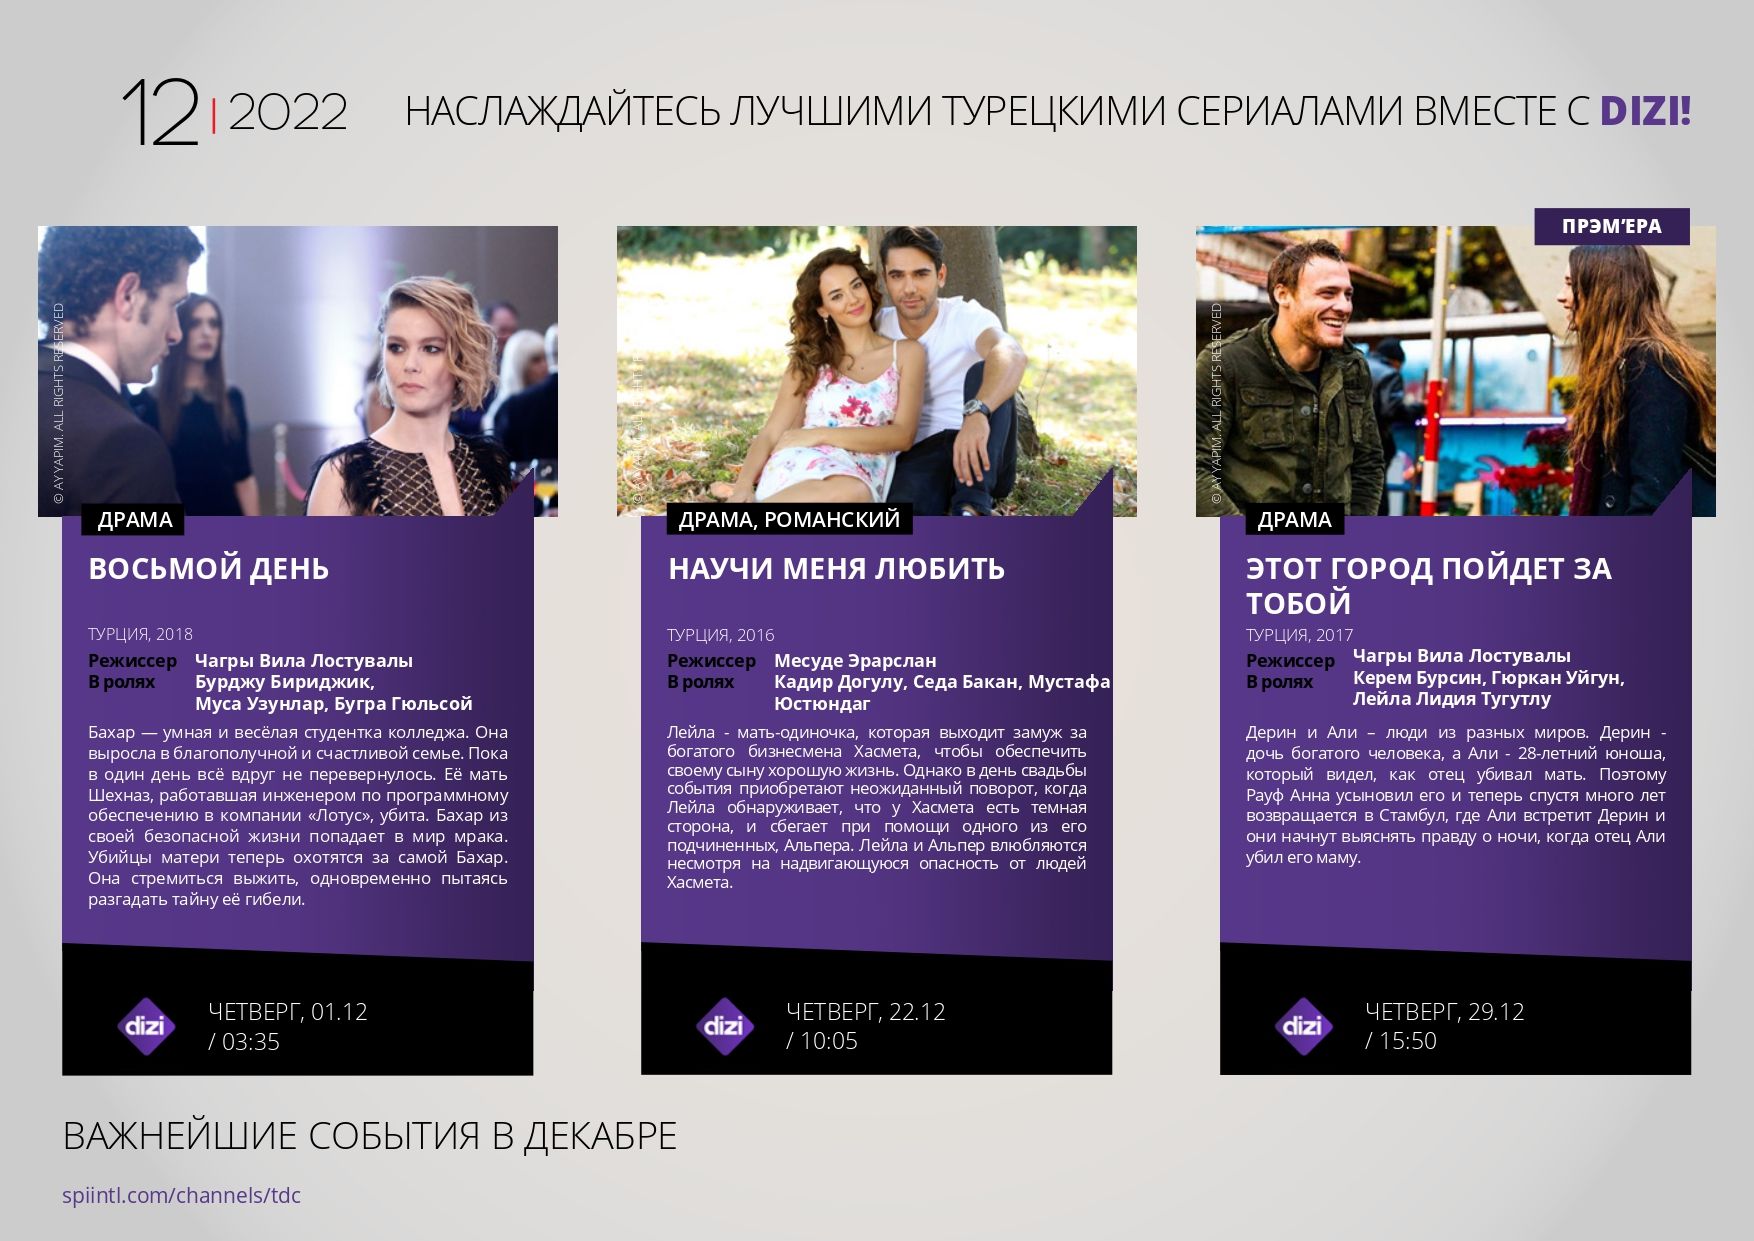 NL_Belarus_2022_12 (1)_page-0004